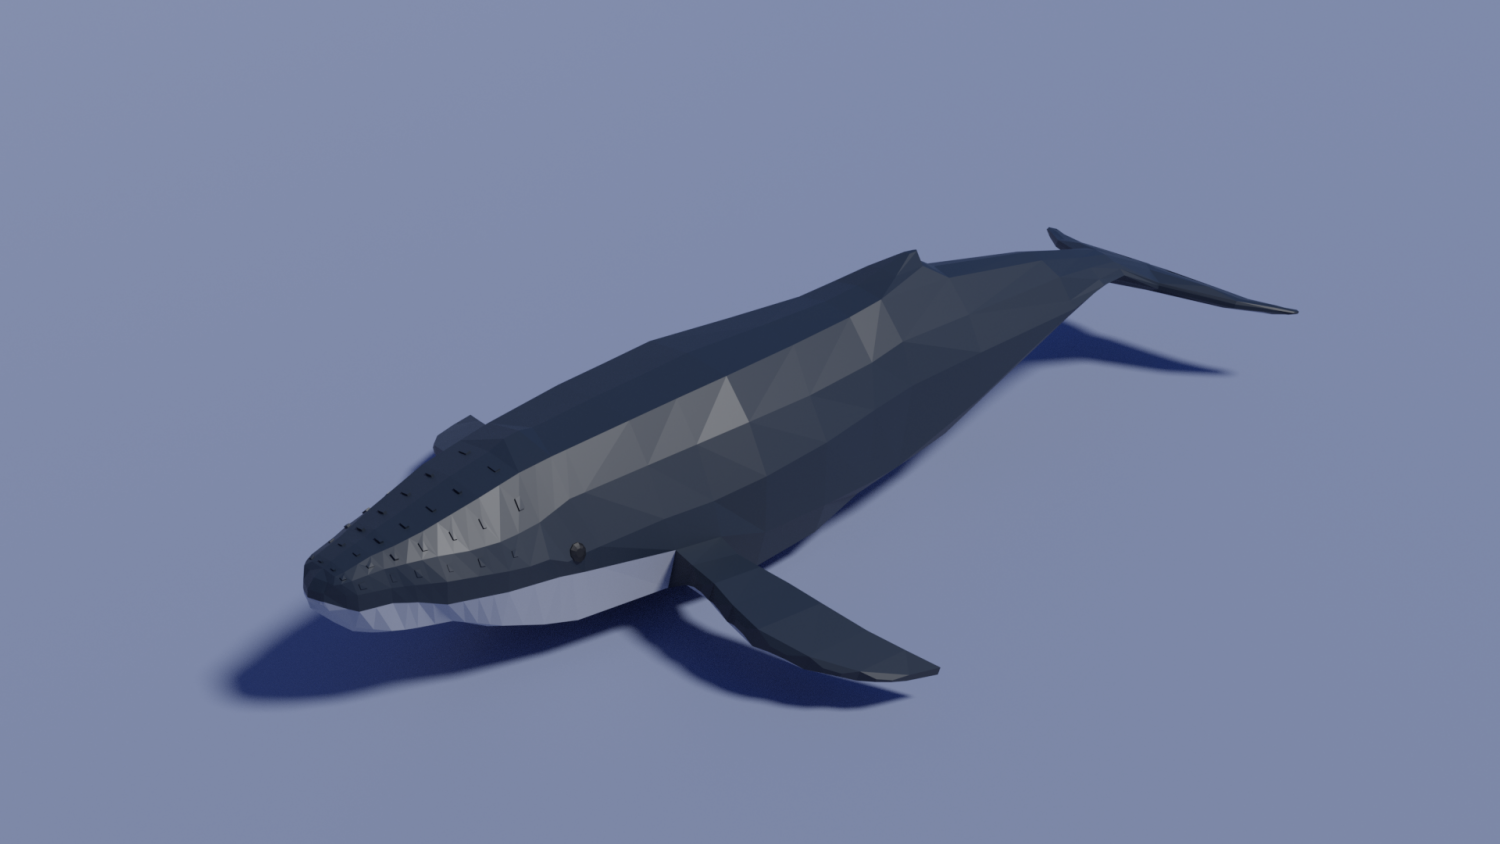 humpback whale cartoon